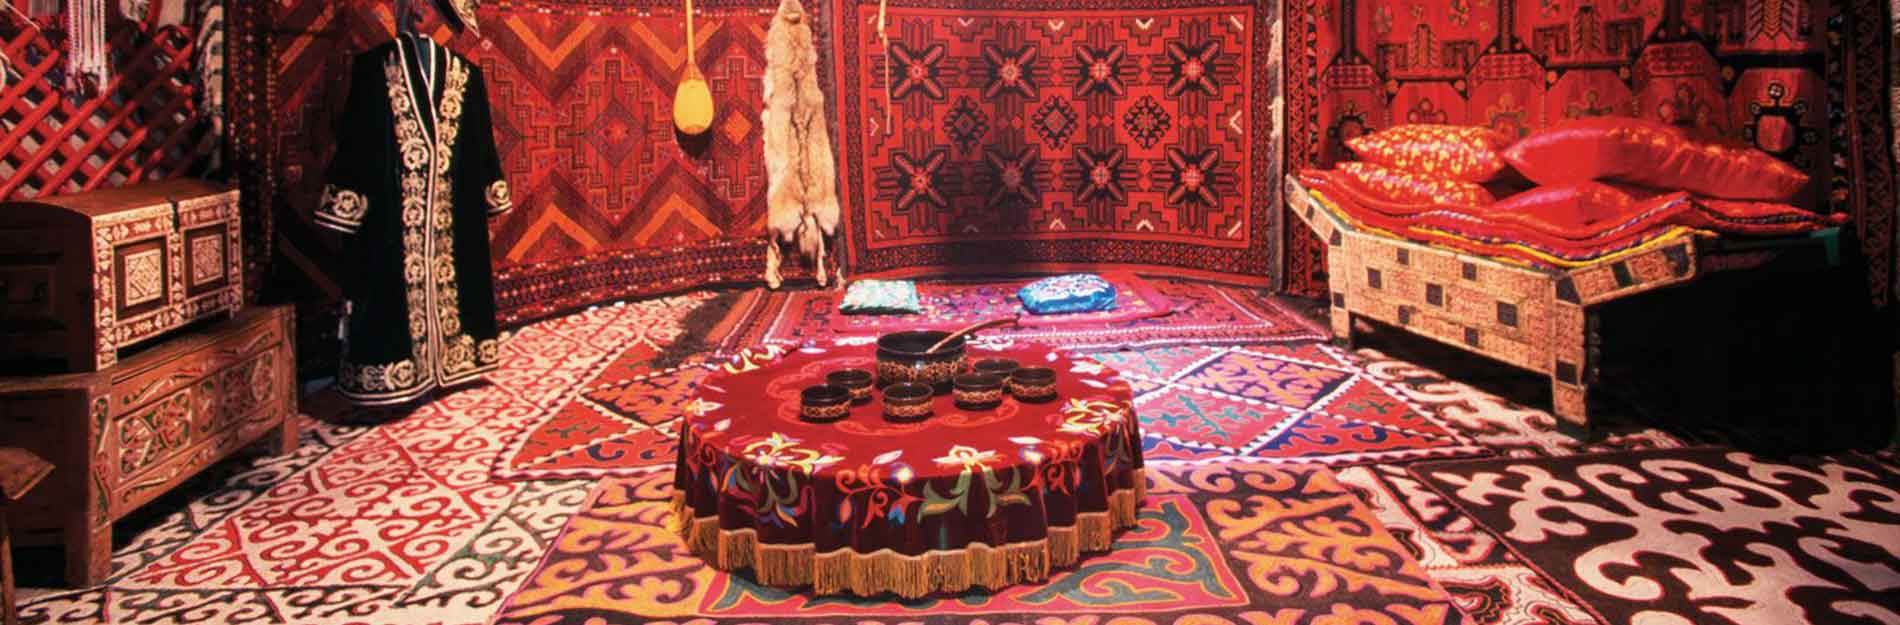 kazakh-rugs-kazakhstan-caucasian-russian-carpets-yurt-textiles